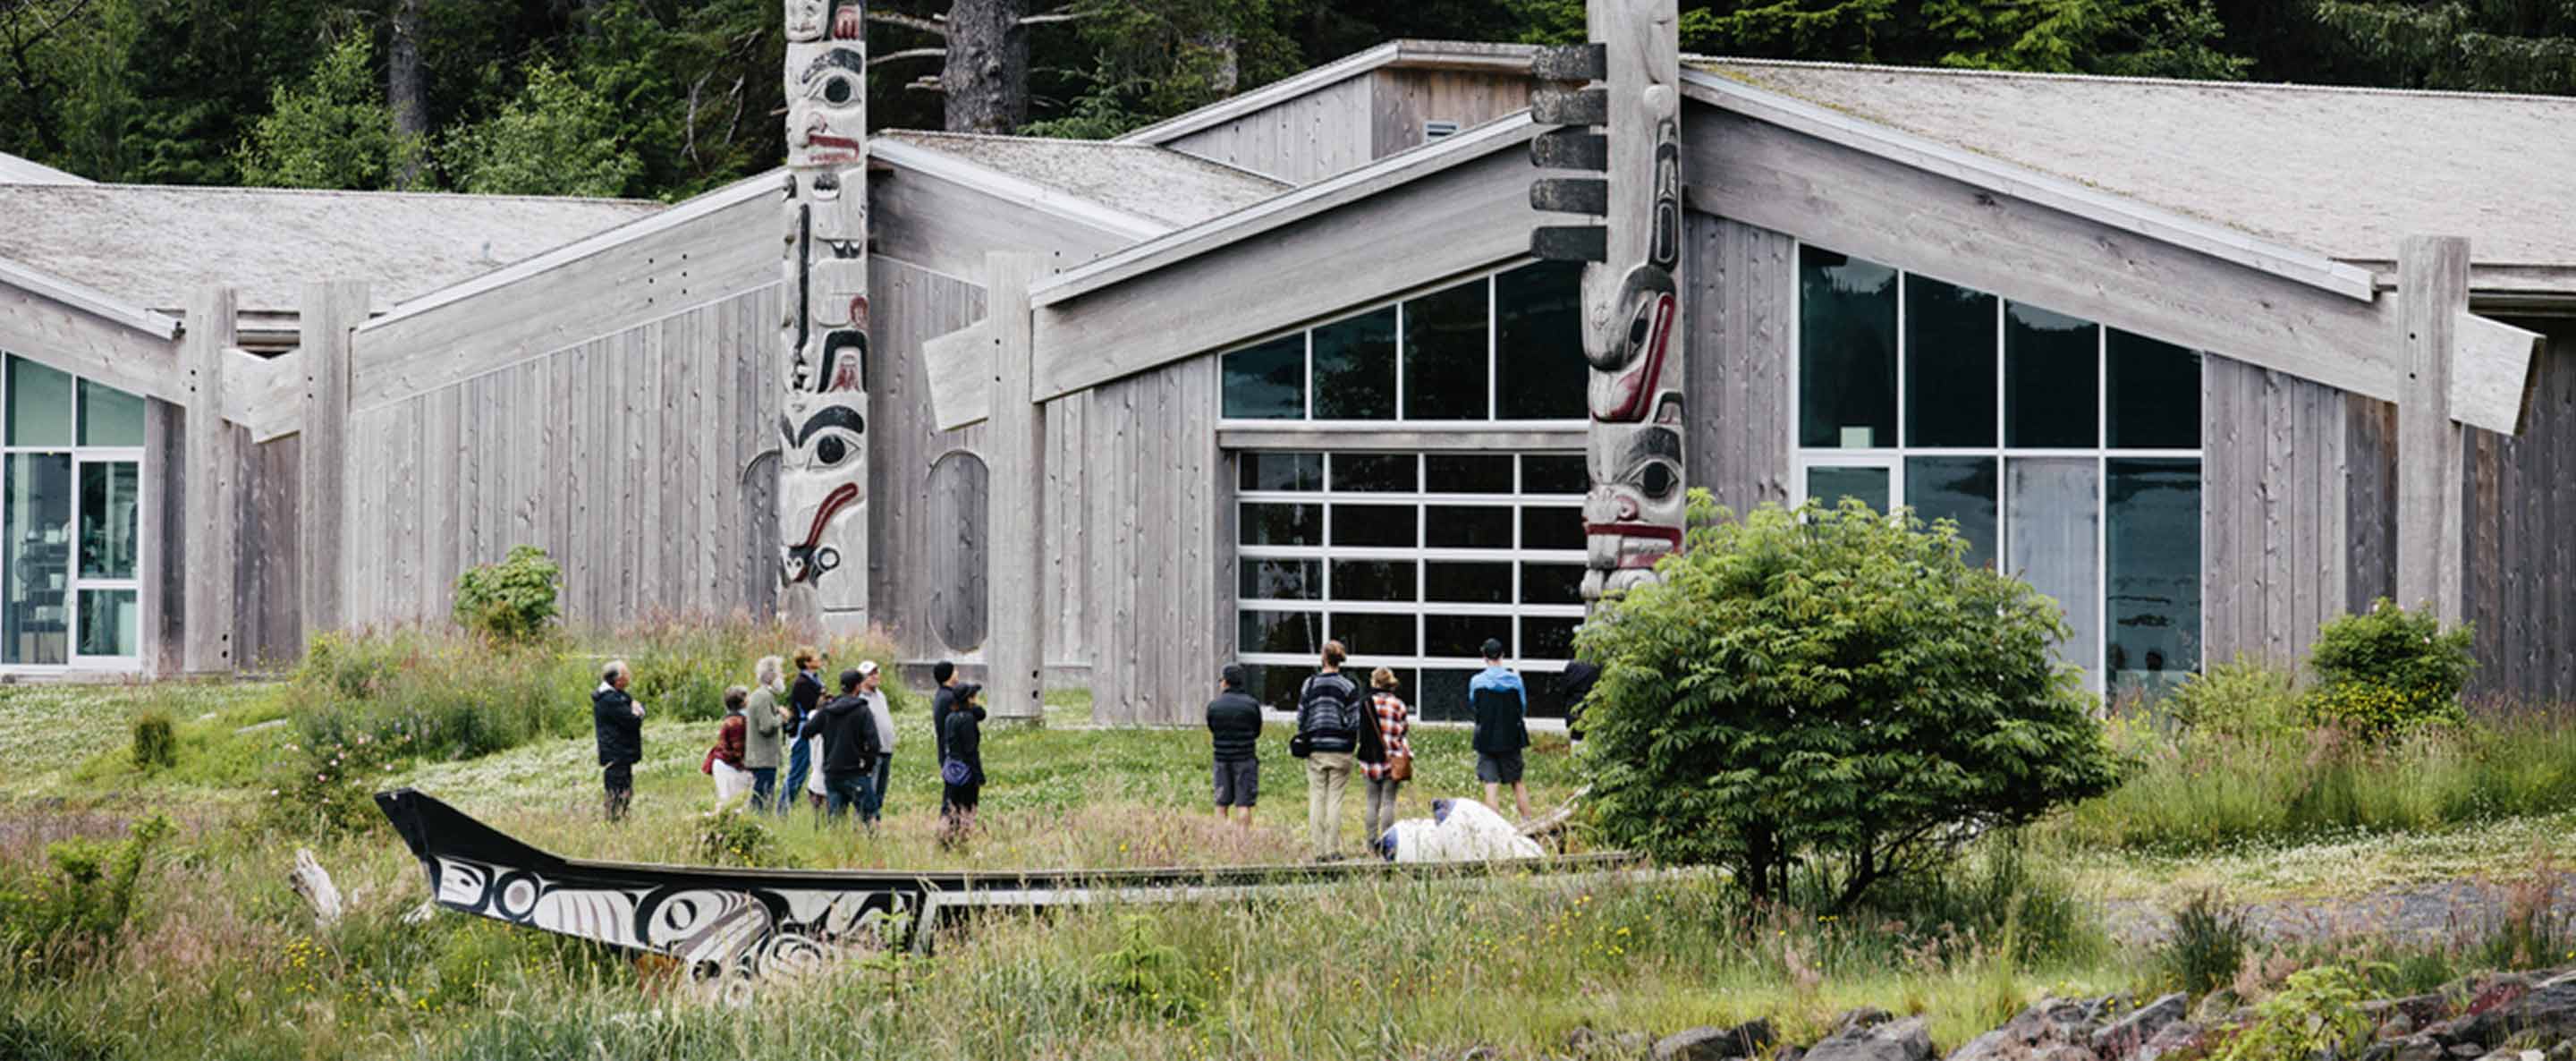 Haida Heritage Centre by Destination BC/Grant Harder